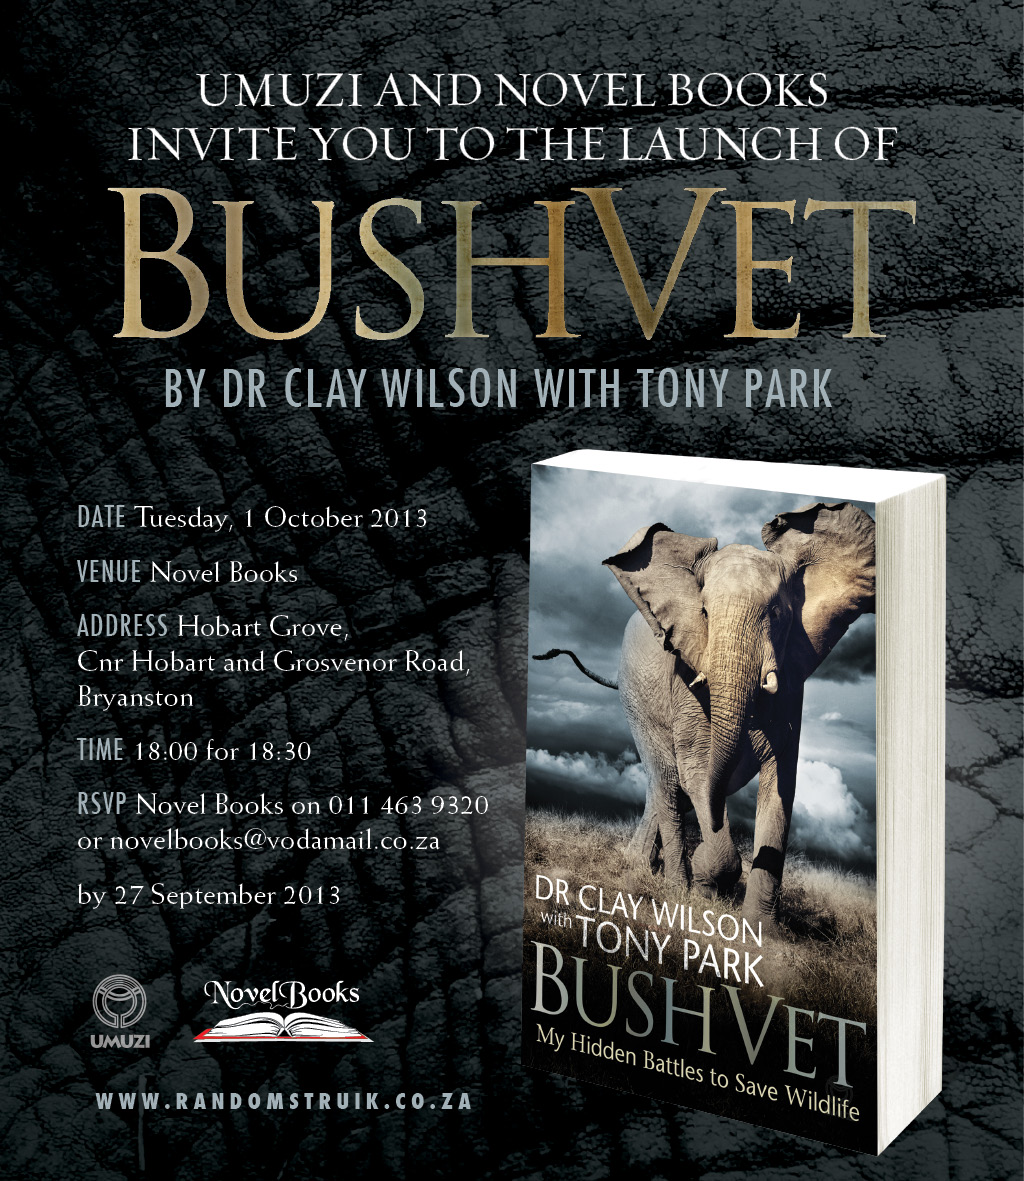 bush_vet_invite_Novel_Books